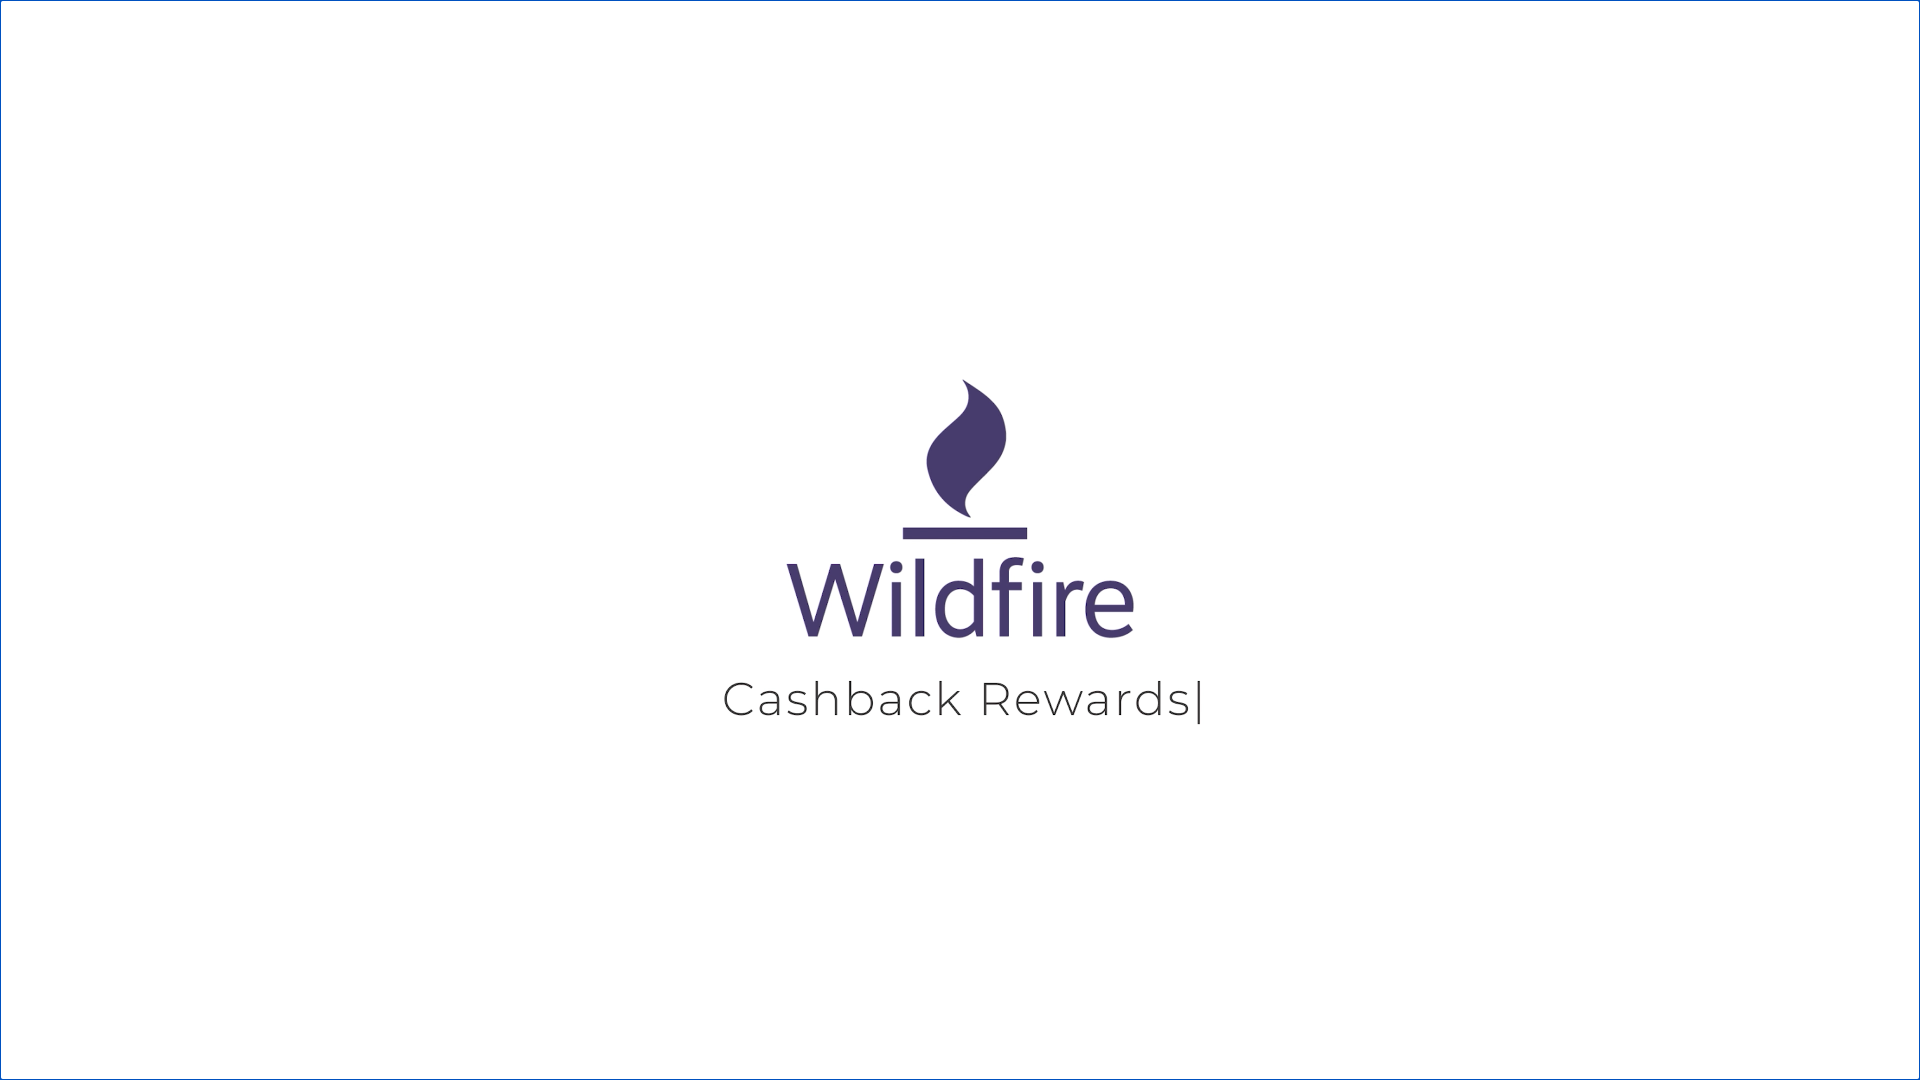 Wildfire | Cashback Rewards [no captions]